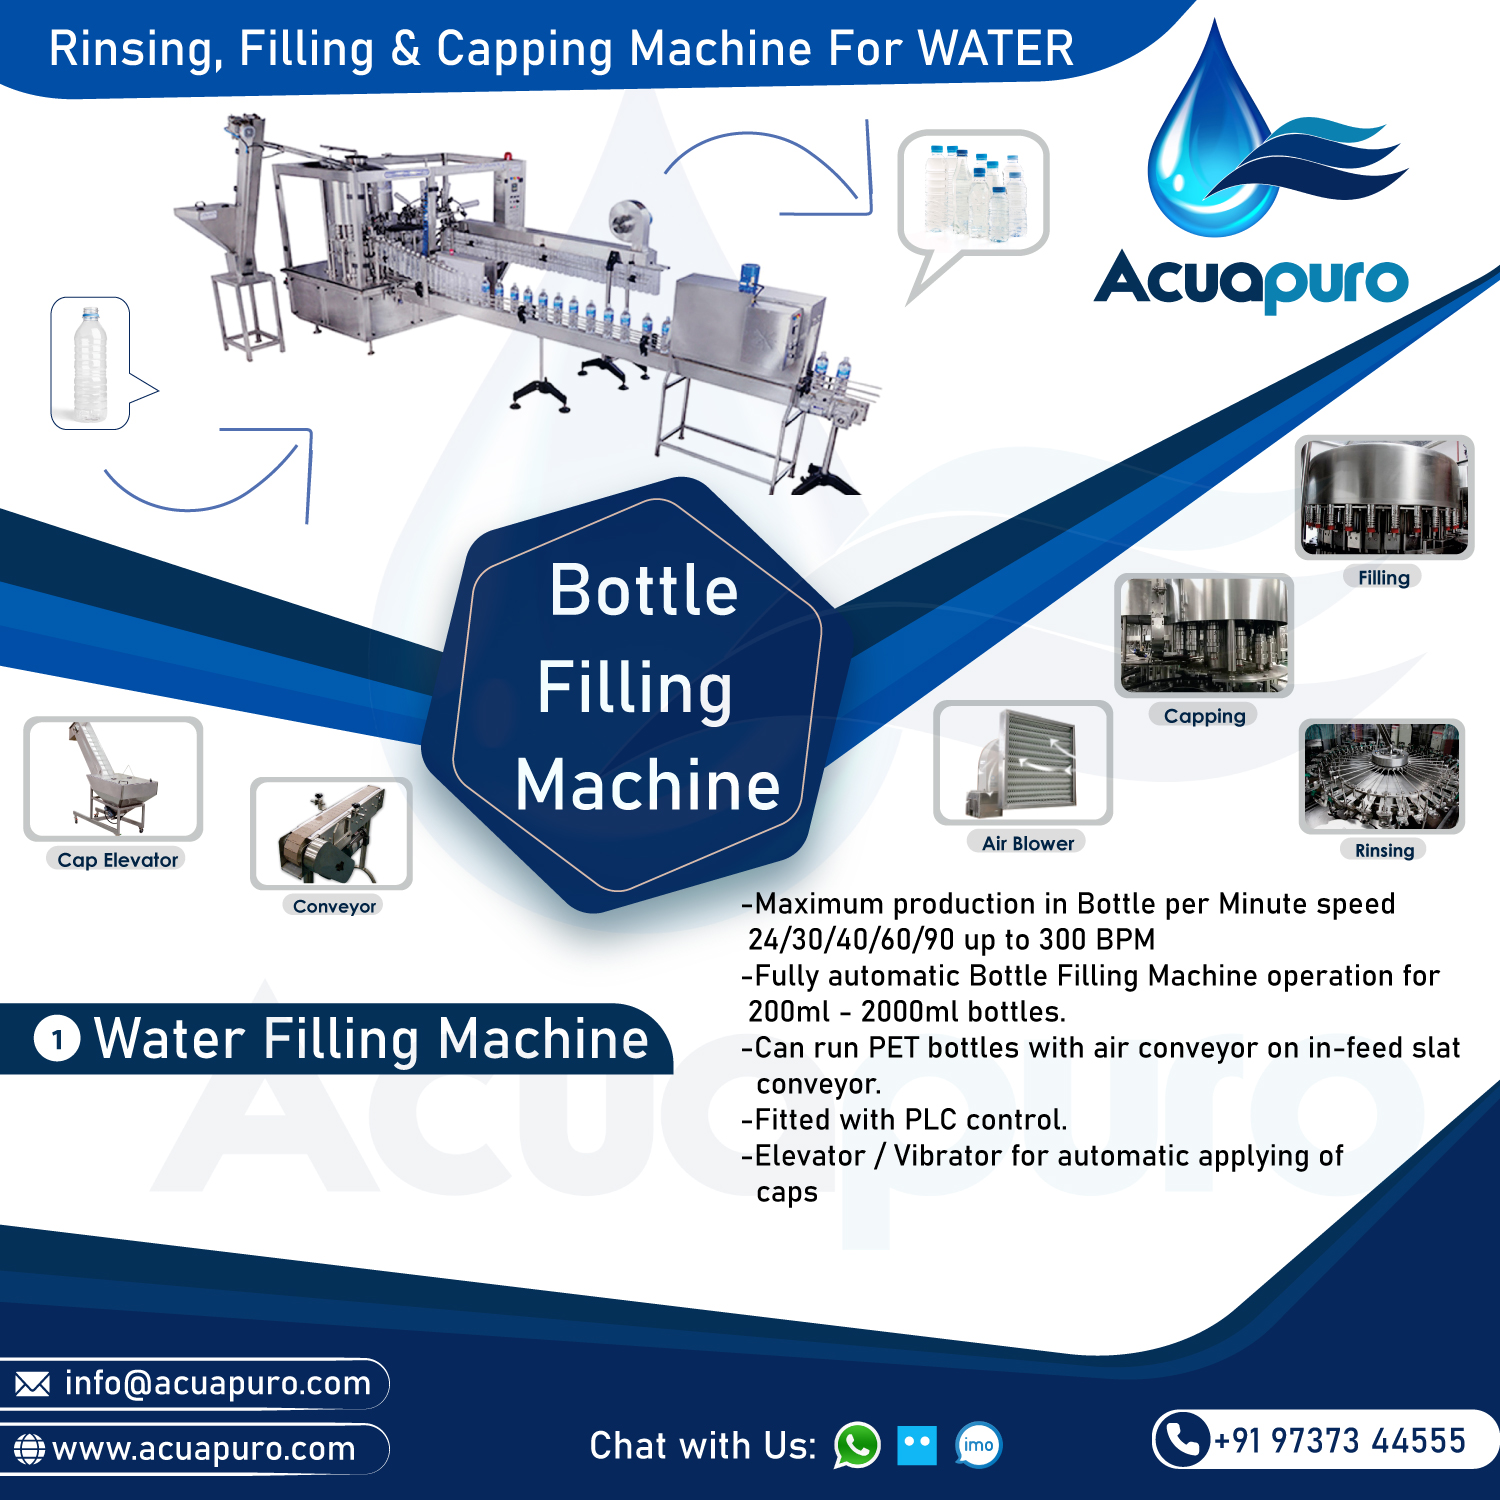 Water Filling Machine Manufacturer in Ahmedabad, India - Acuapuro Water